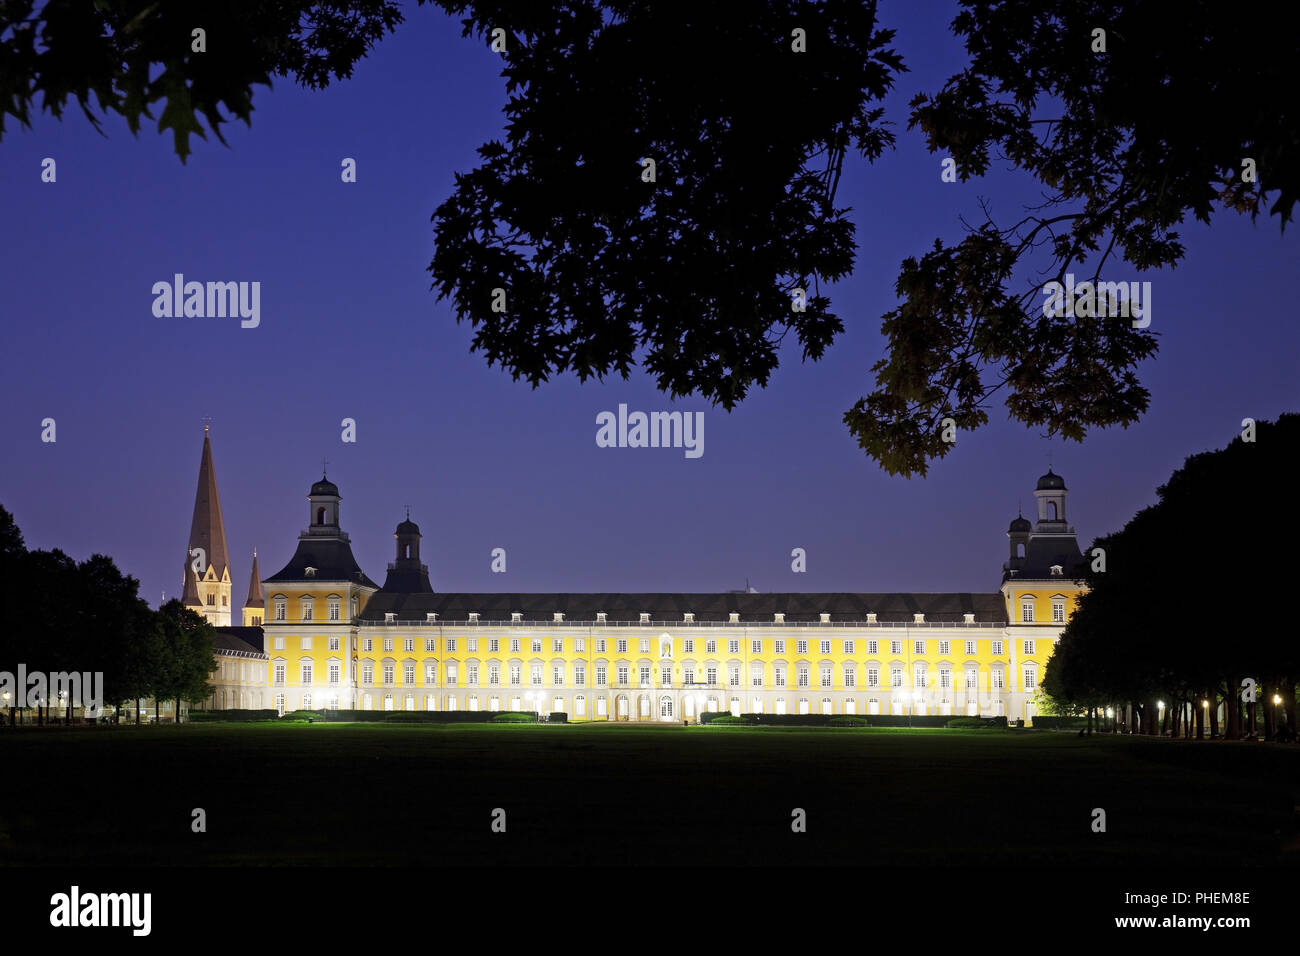 Electoral Palace, the main building of the university, Bonn, North Rhine-Westphalia, Germany, Europe Stock Photo